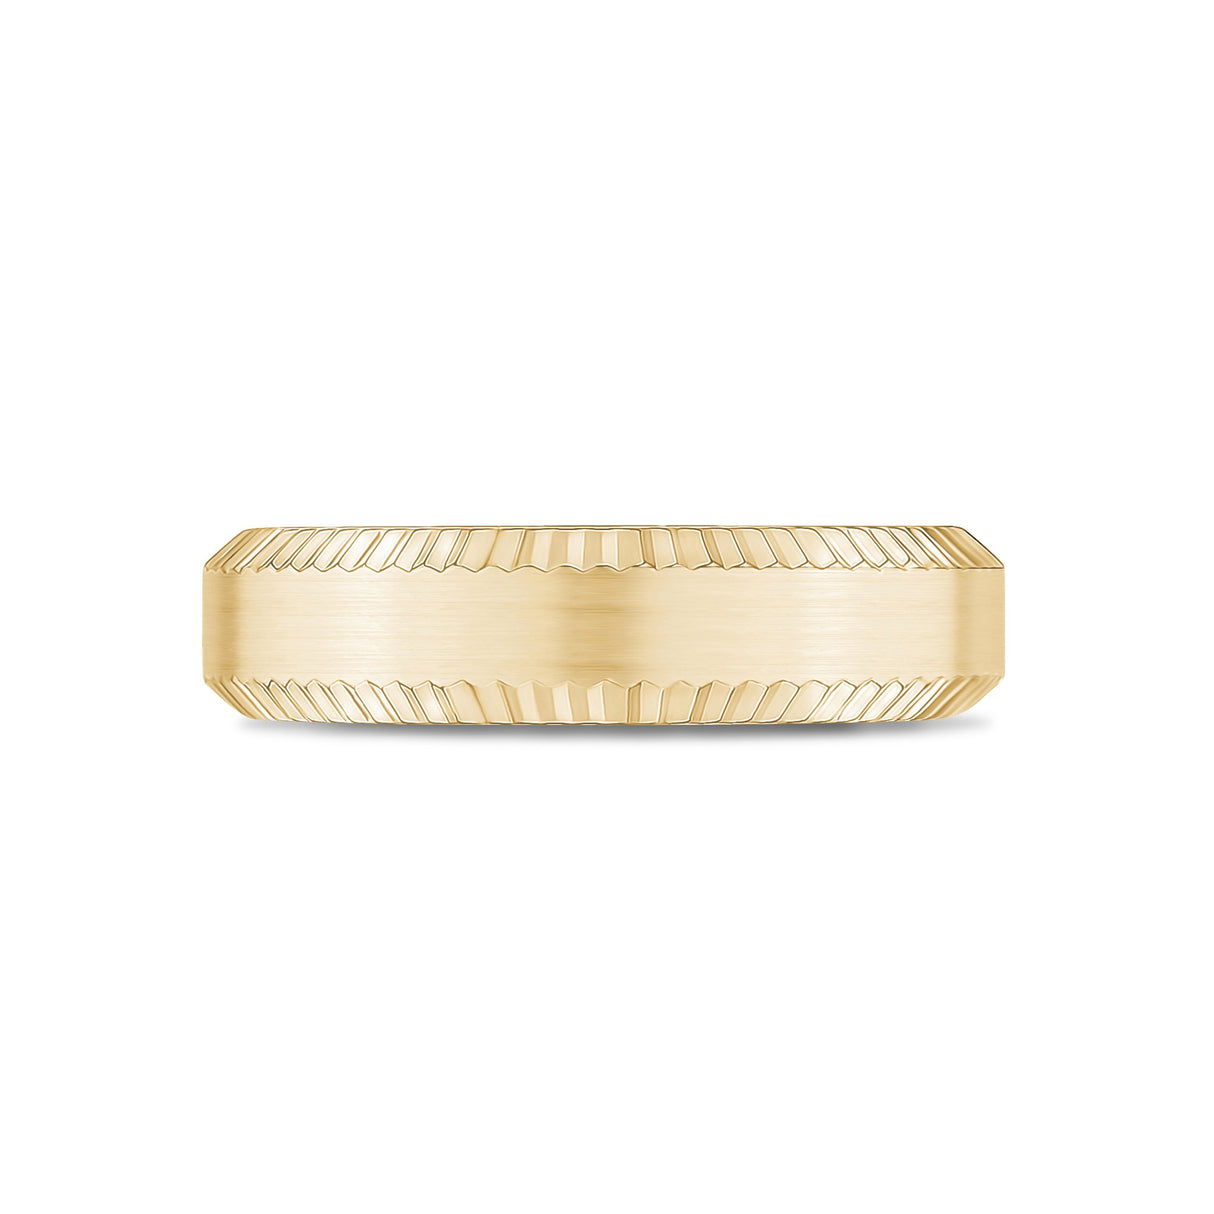 Men Ring - 6mm Beveled Edge Flat Gold Steel Engravable Band Ring